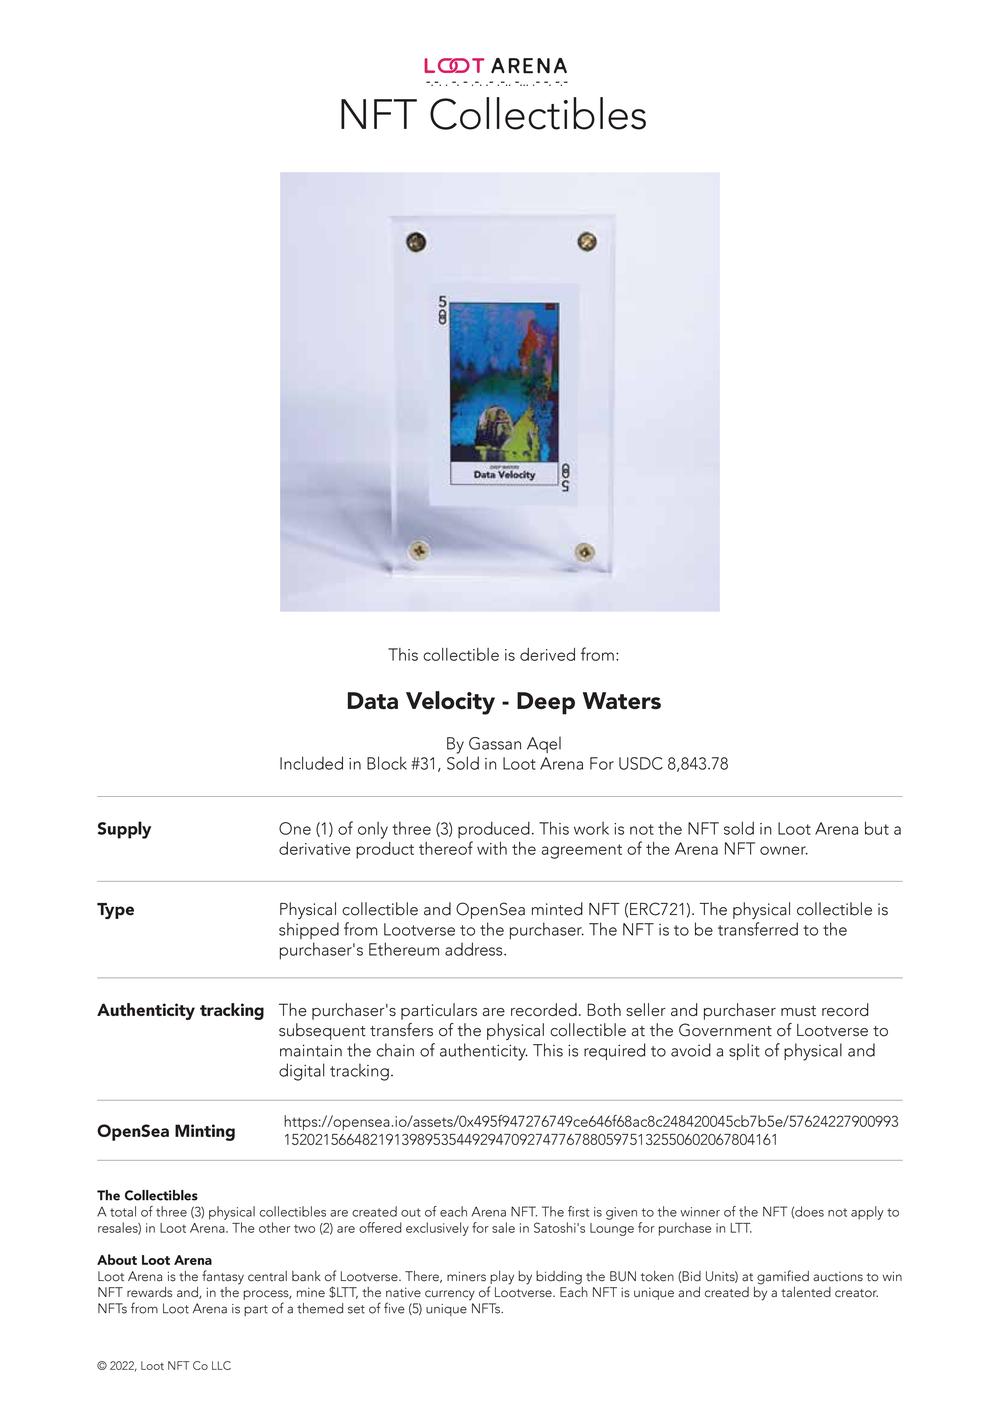 Data velocity #1_Contract.pdf